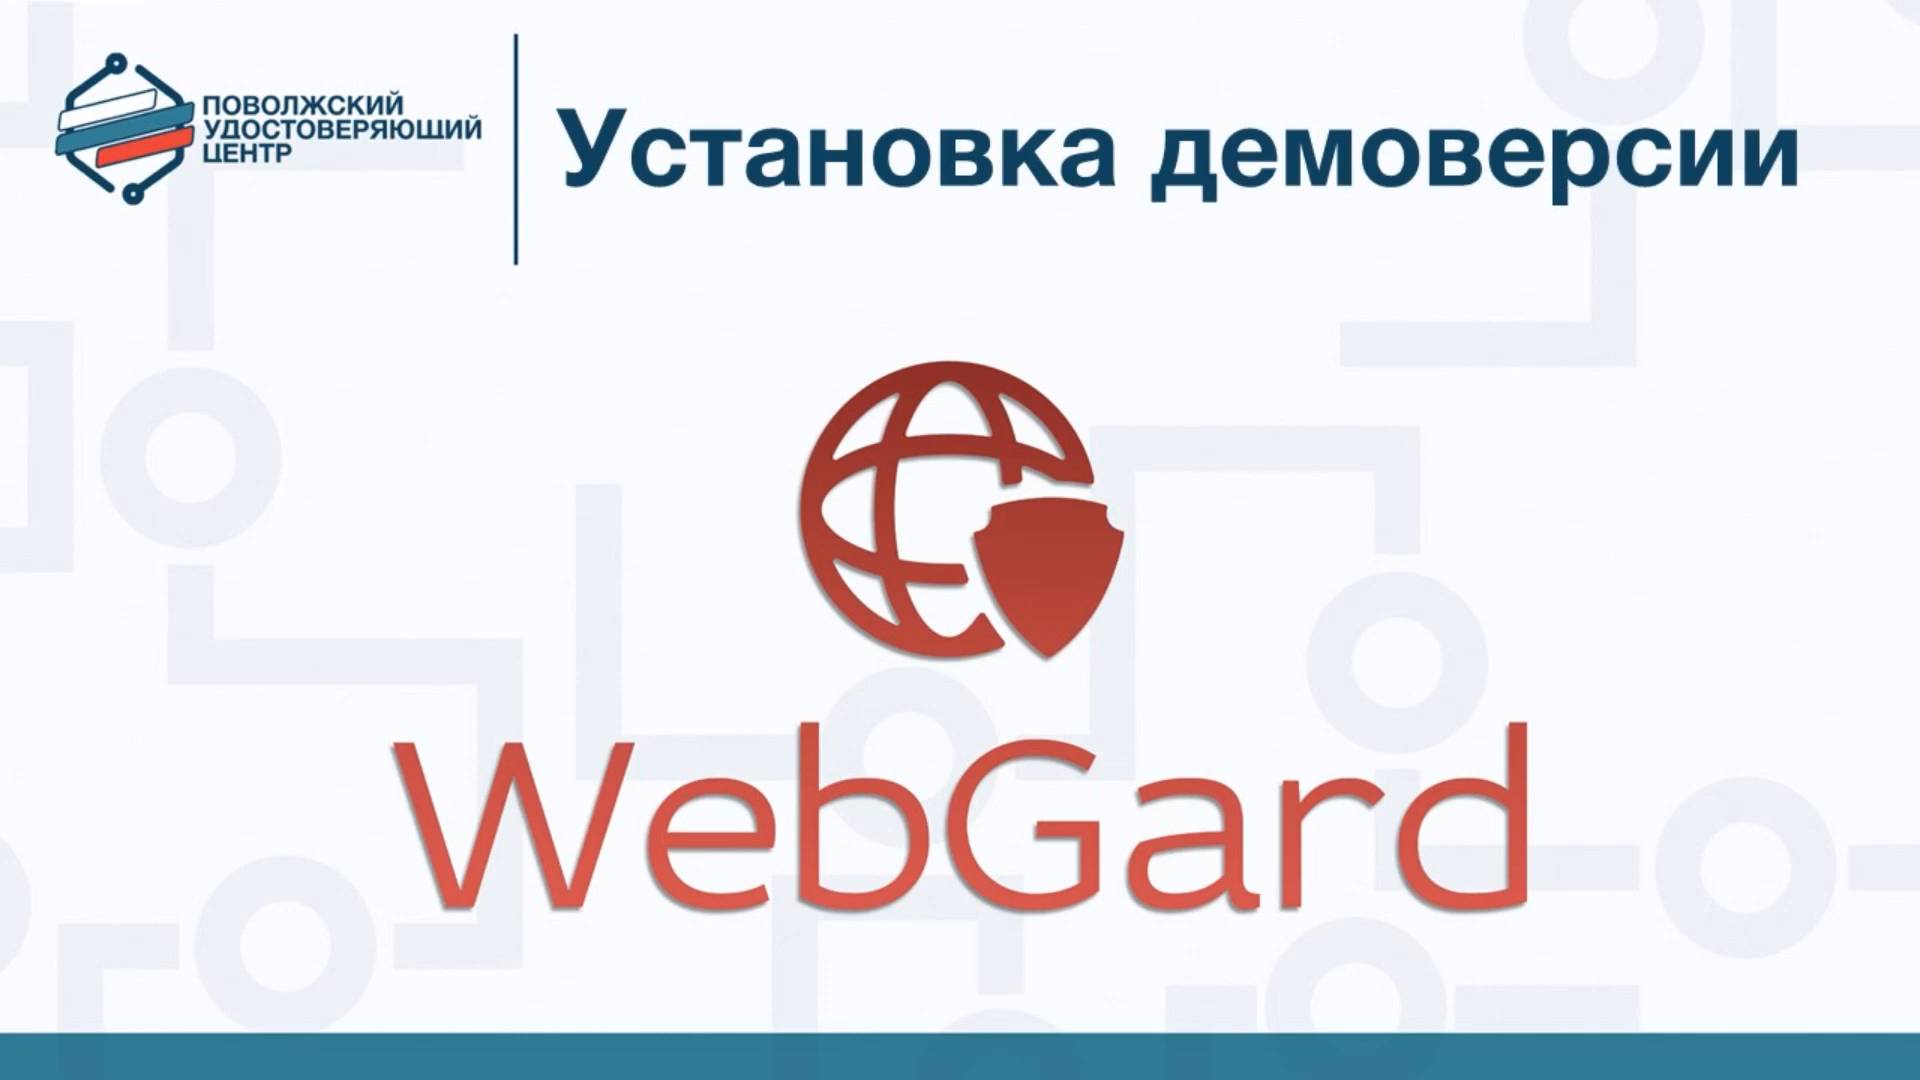 Демоверсия WebGard 2.0 Установка